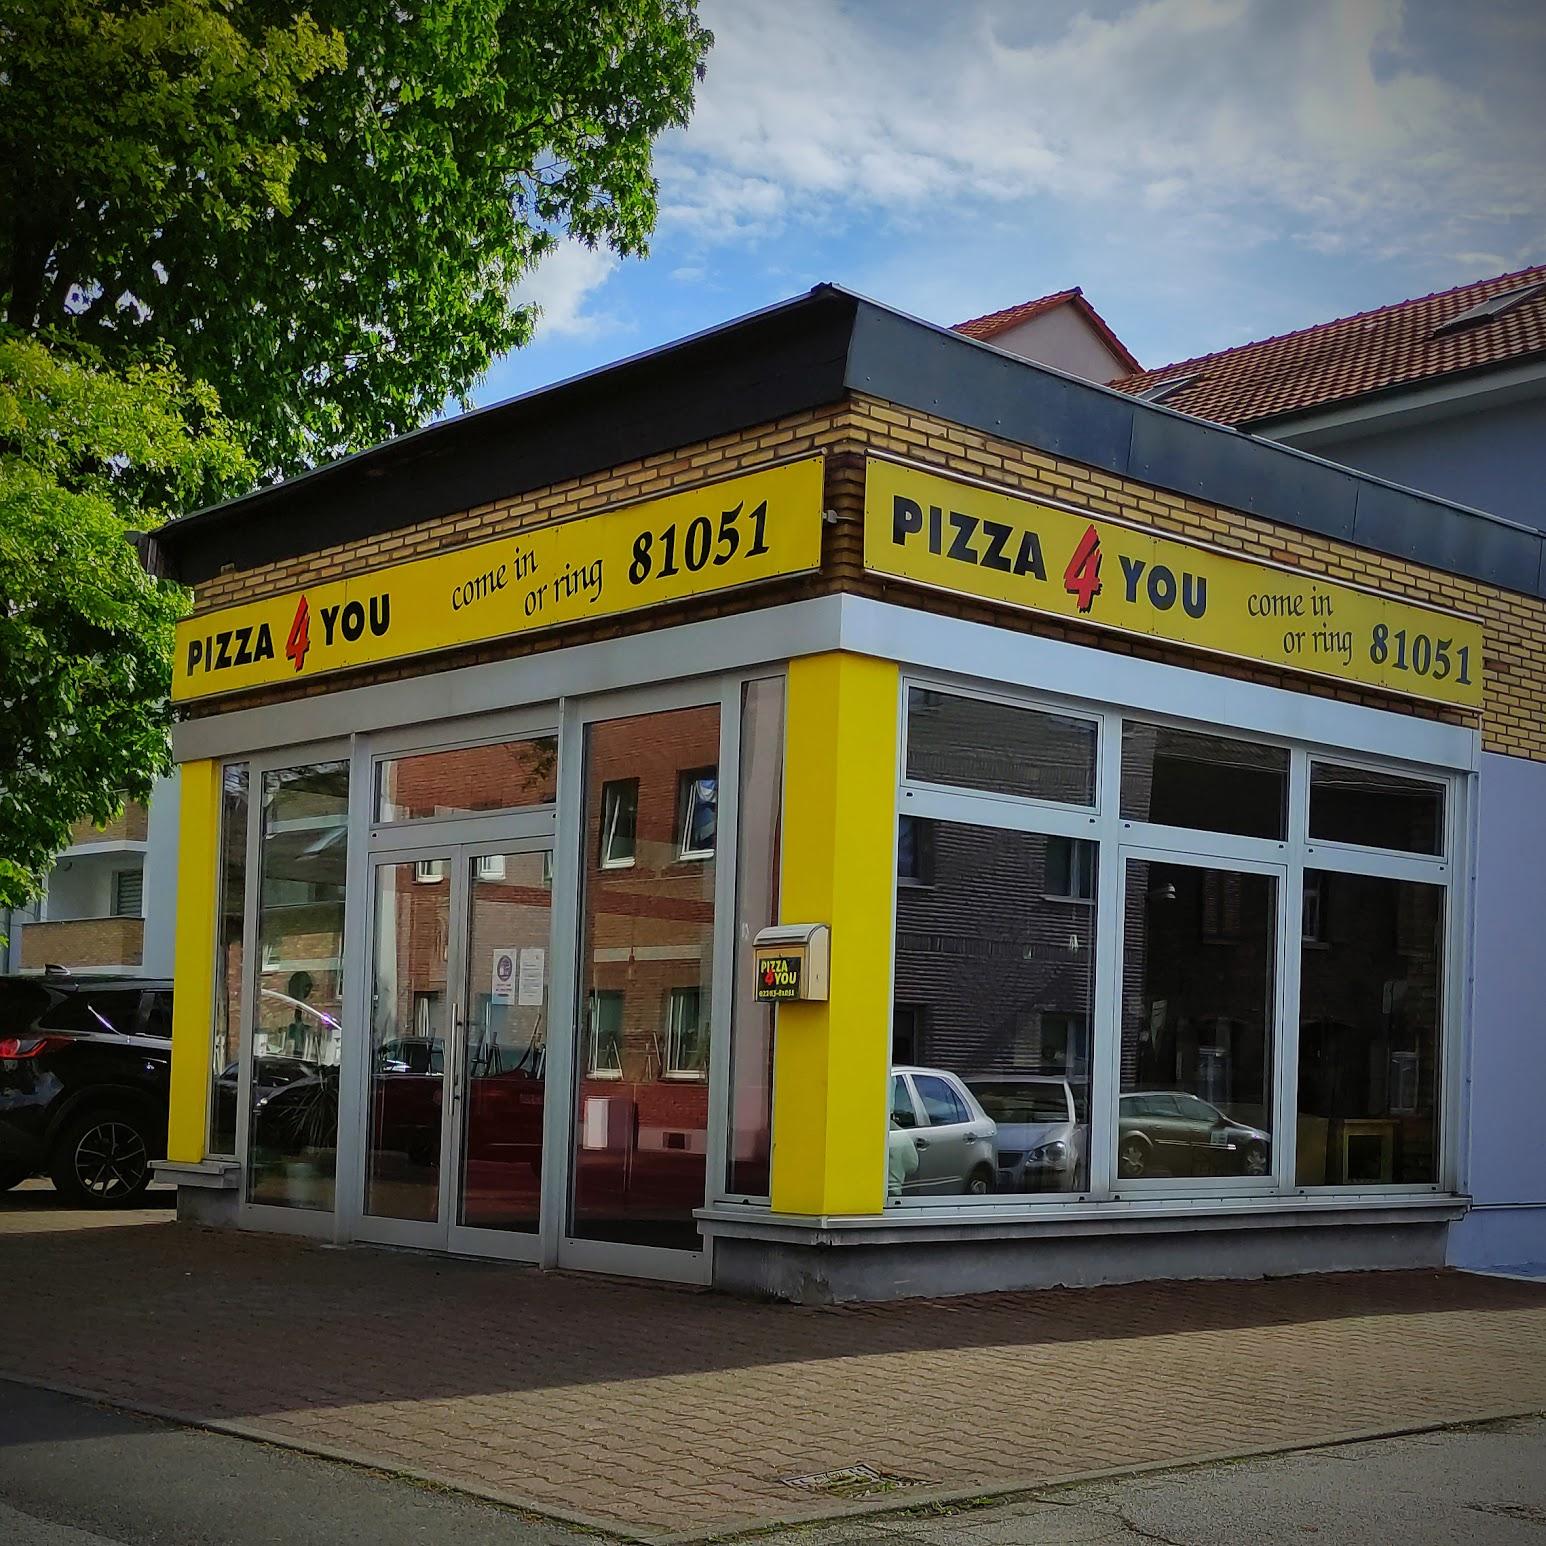 Restaurant "Pizza 4 You" in Köln